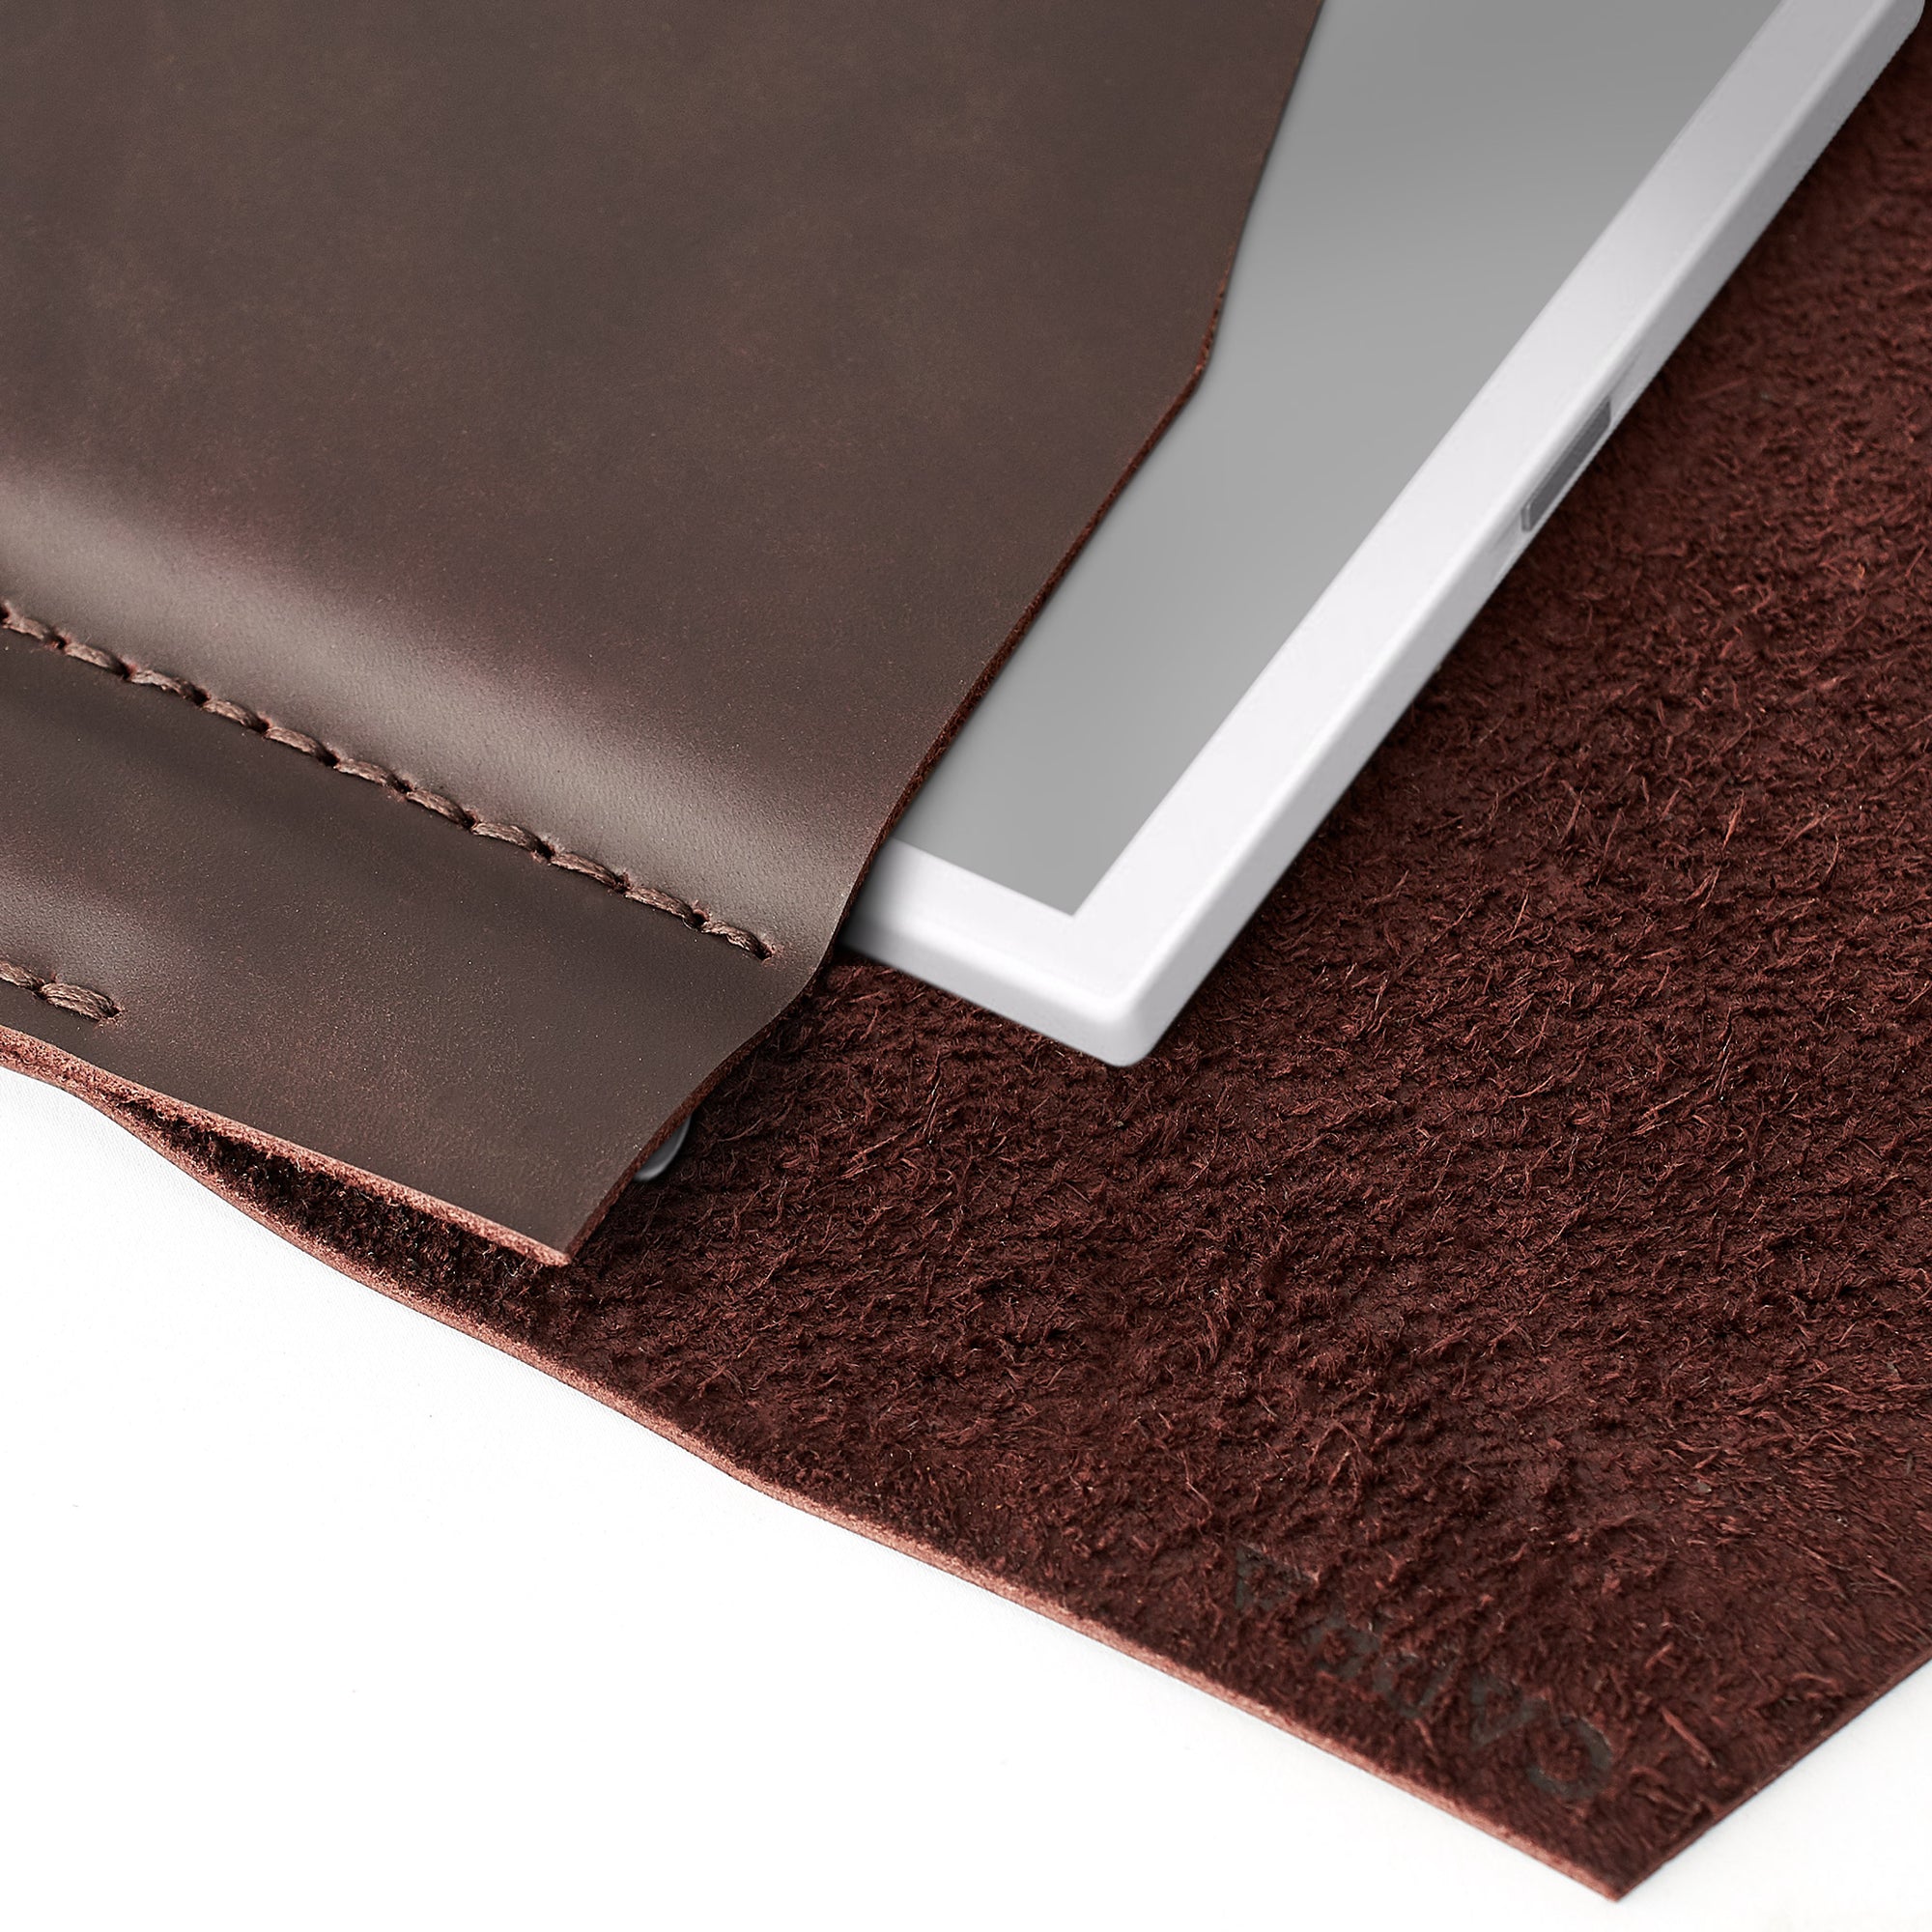 Soft interior. Dark brown handcrafted leather reMarkable tablet case. Folio with Marker holder. Paper E-ink tablet minimalist sleeve design. 